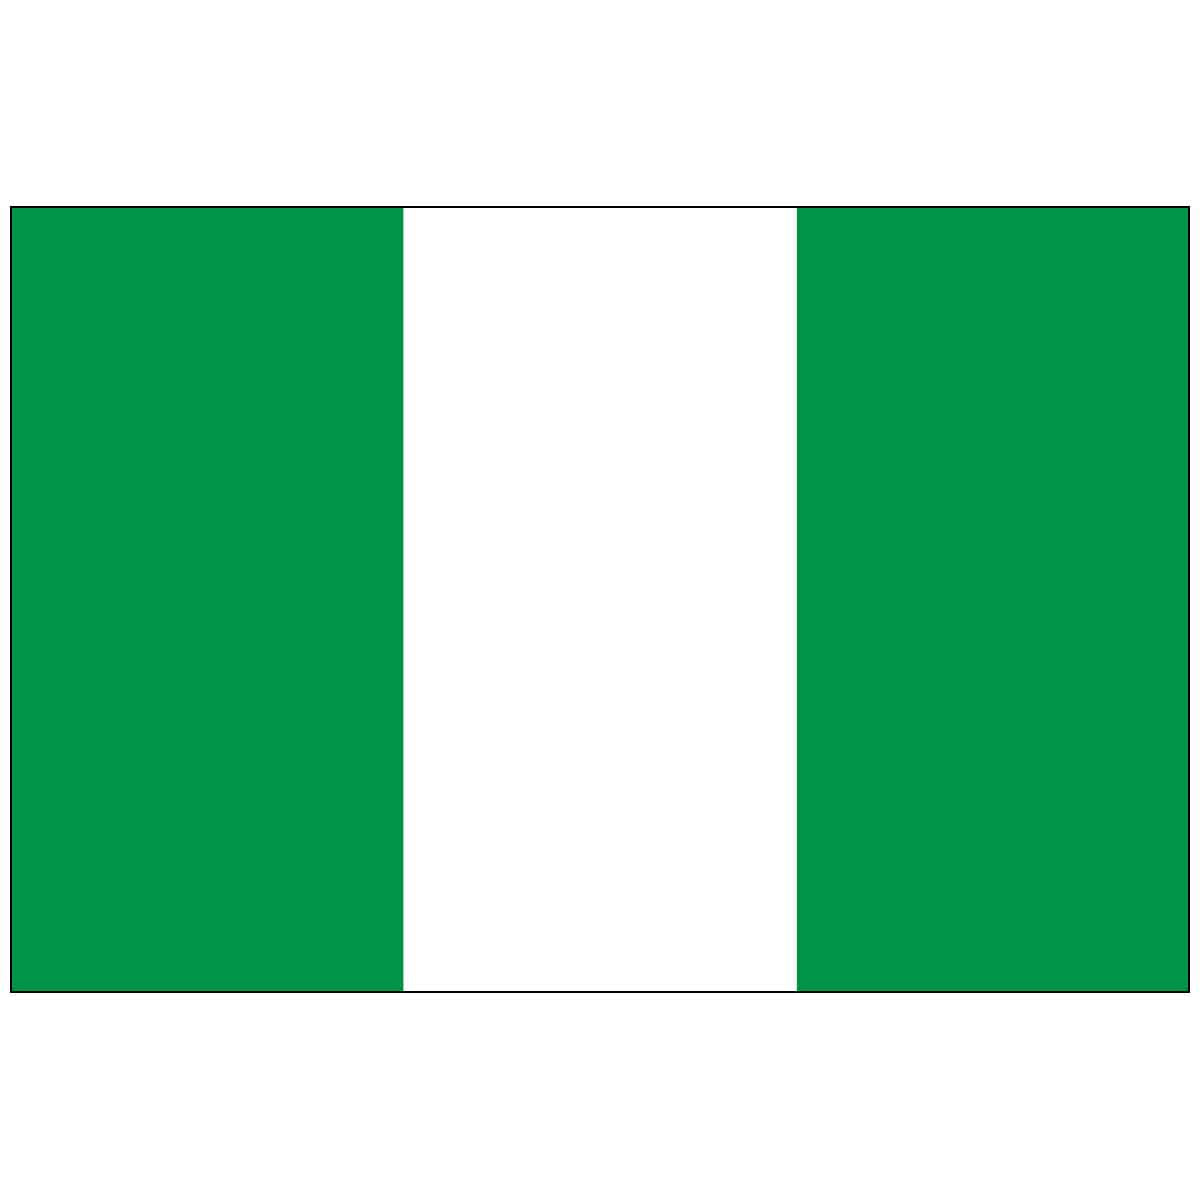 3' x 5' Nigeria (UN) World Flag - e-poly